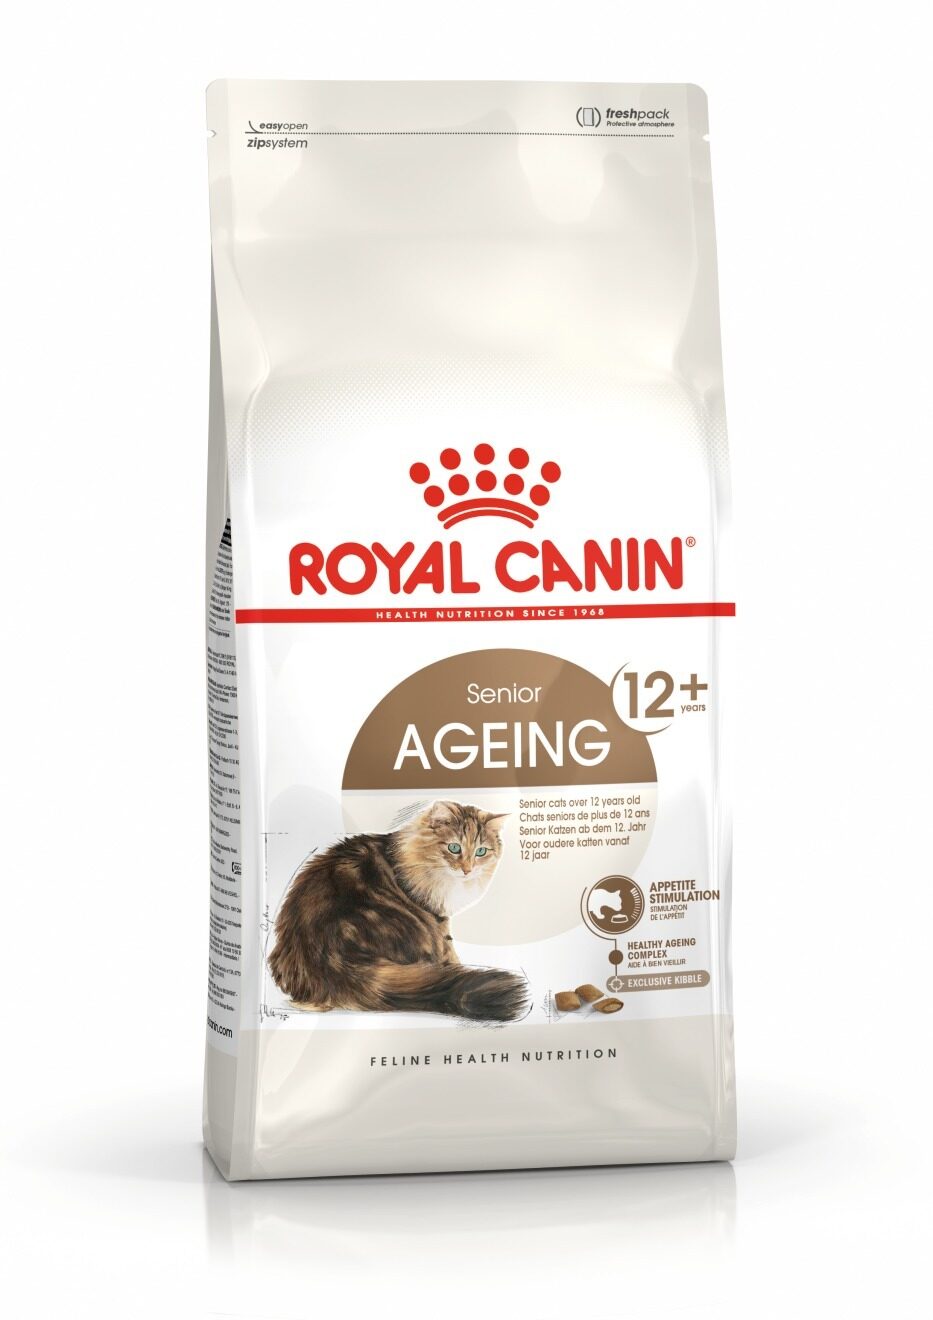 Royal Canin Ageing 12+, упаковка 4 кг